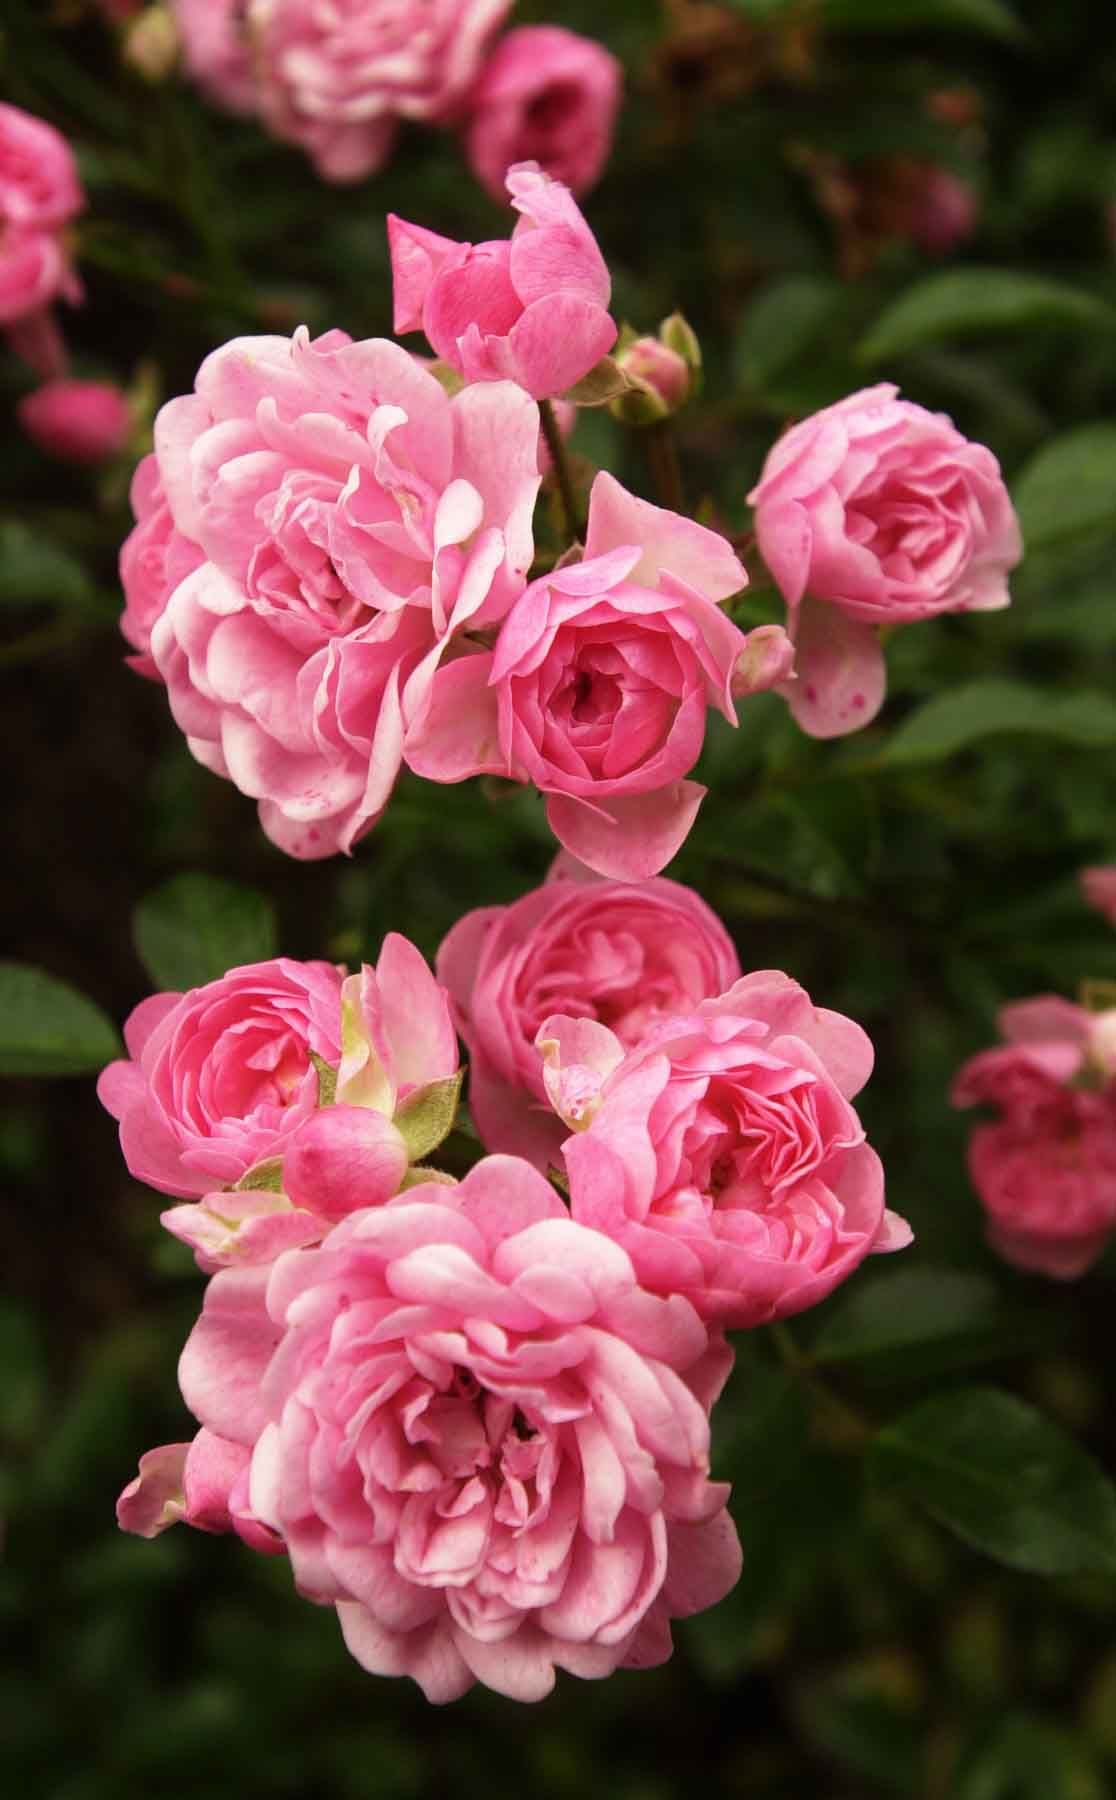 Wild roses | flowers | Pinterest | Rose, Flowers and Gardens